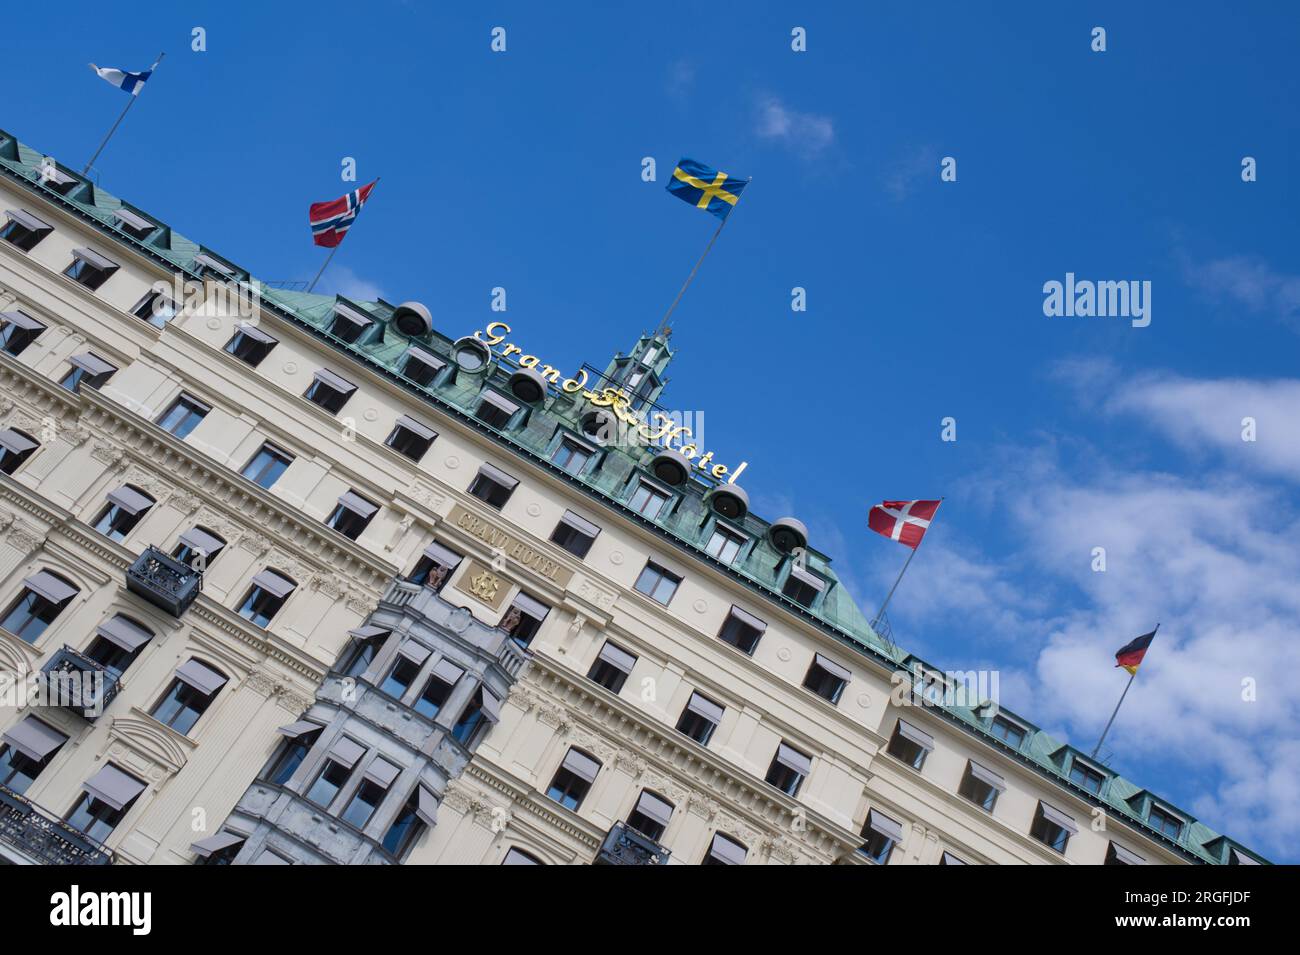 Grand Hotel, Stockholm, Sweden Stock Photo